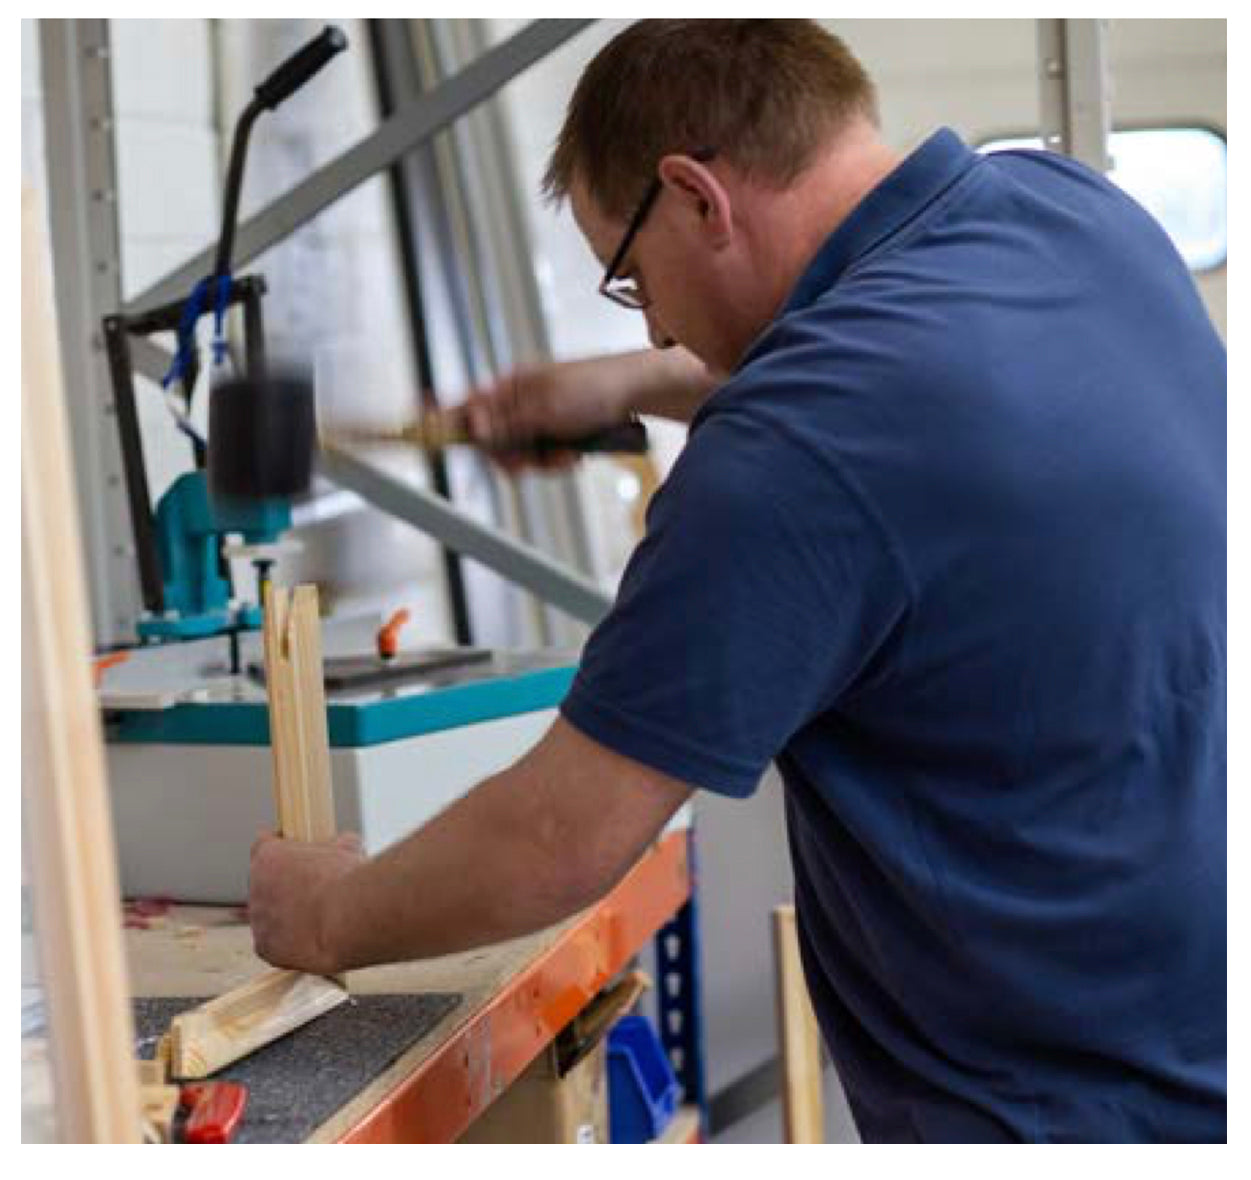 British craftsman making a wooden frame in a workshop